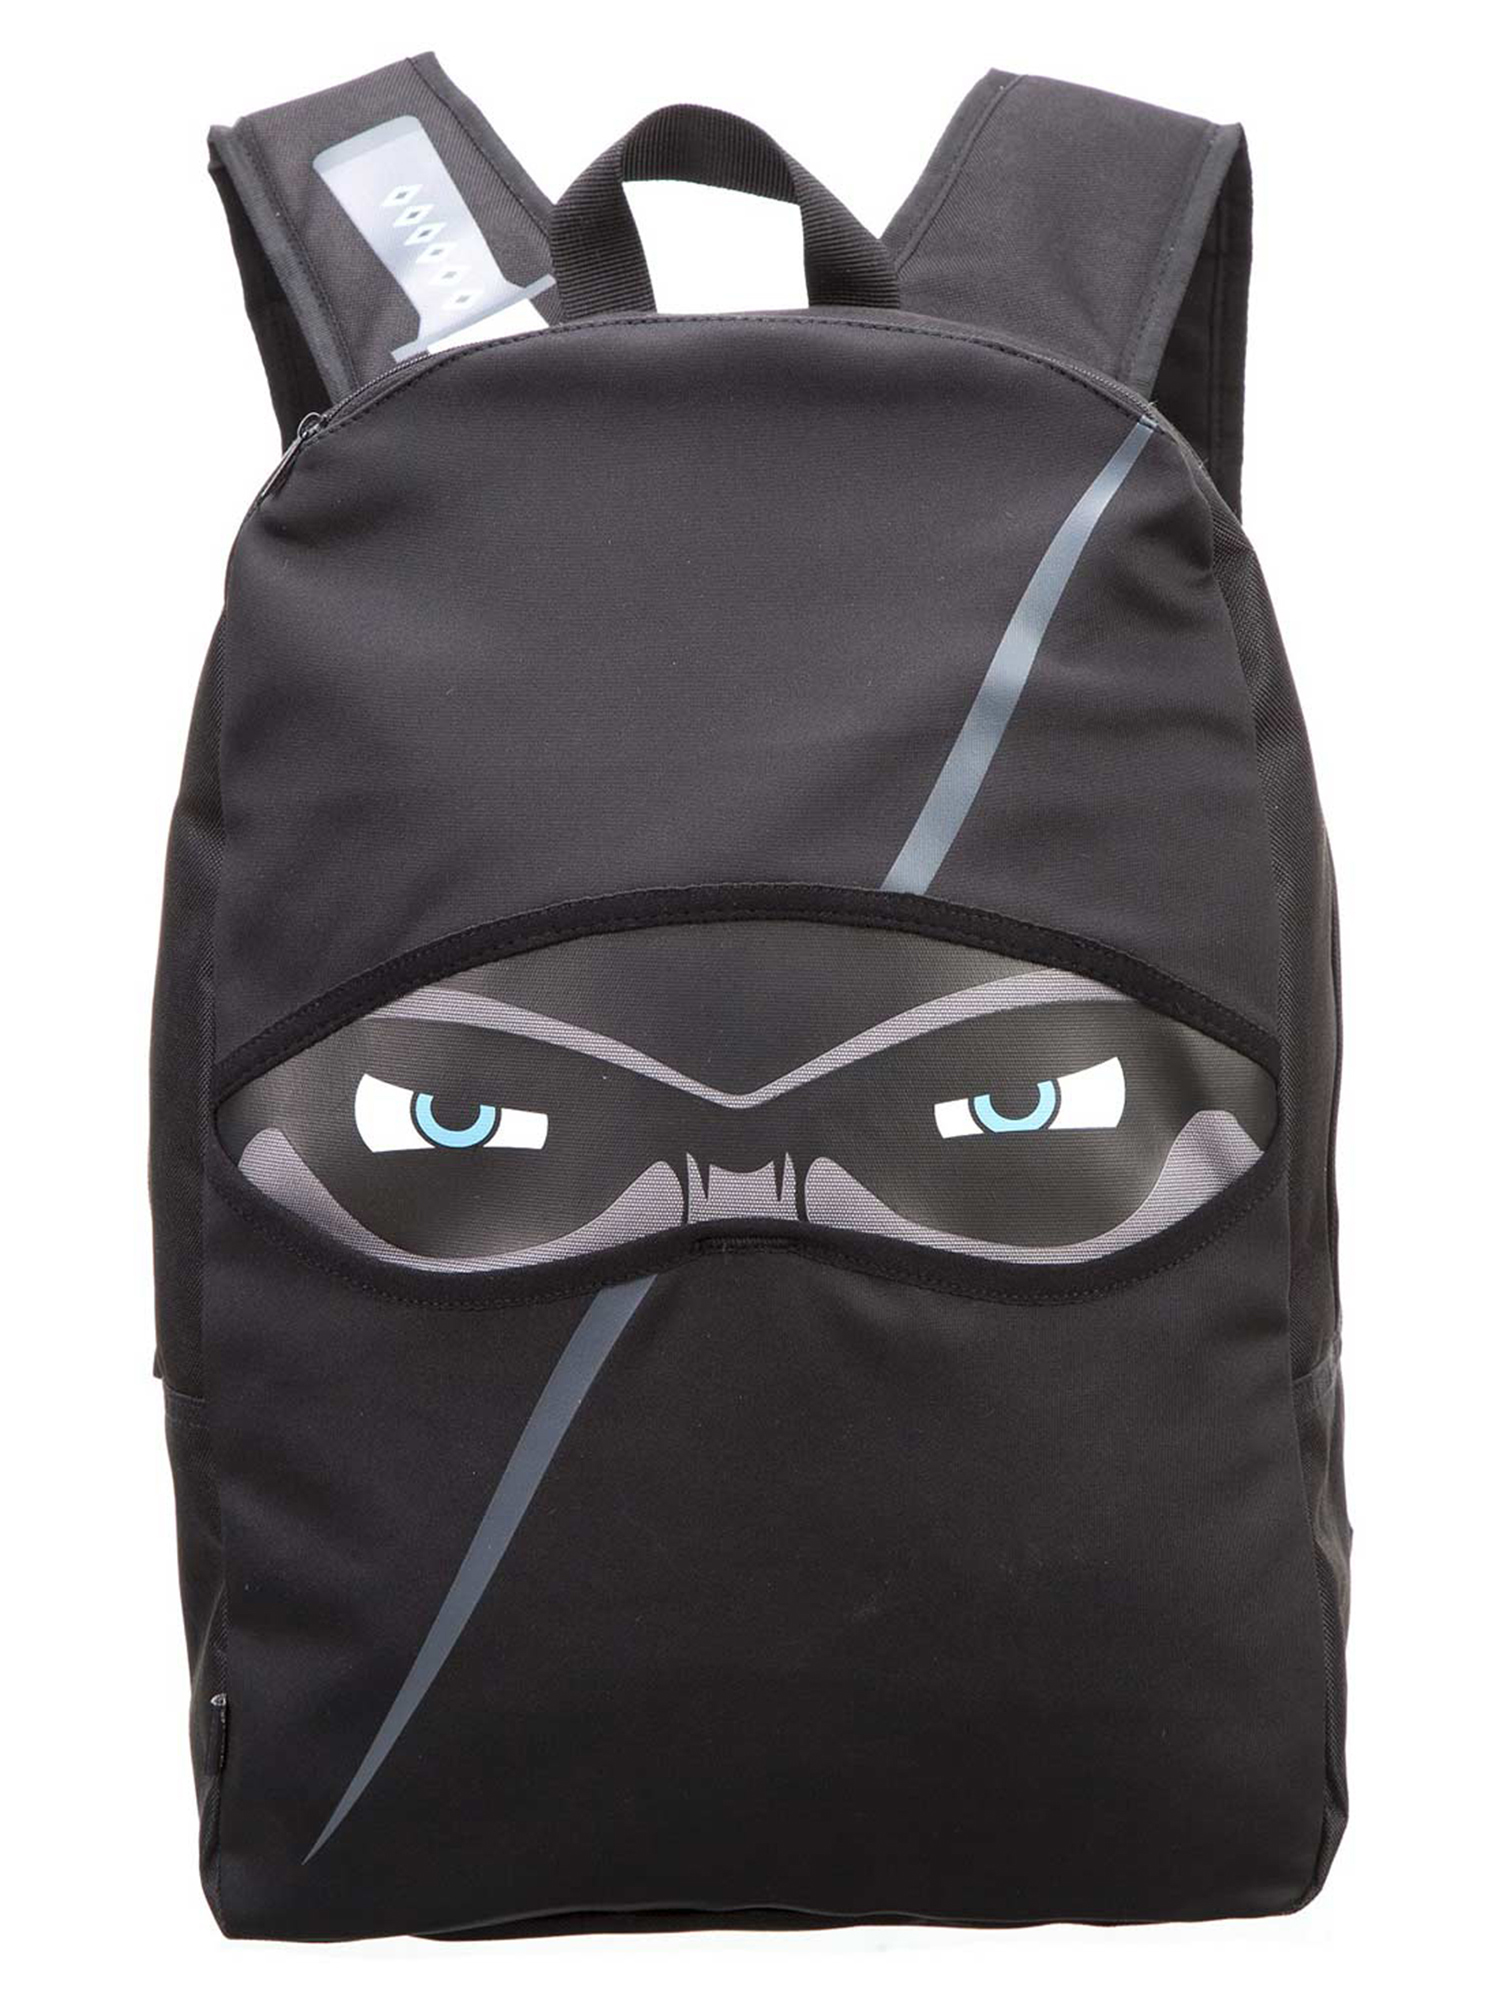 ZIPIT Ninja Backpack for Boys Elementary School & Preschool, Cute Book Bag for Kids (Black) - image 1 of 10